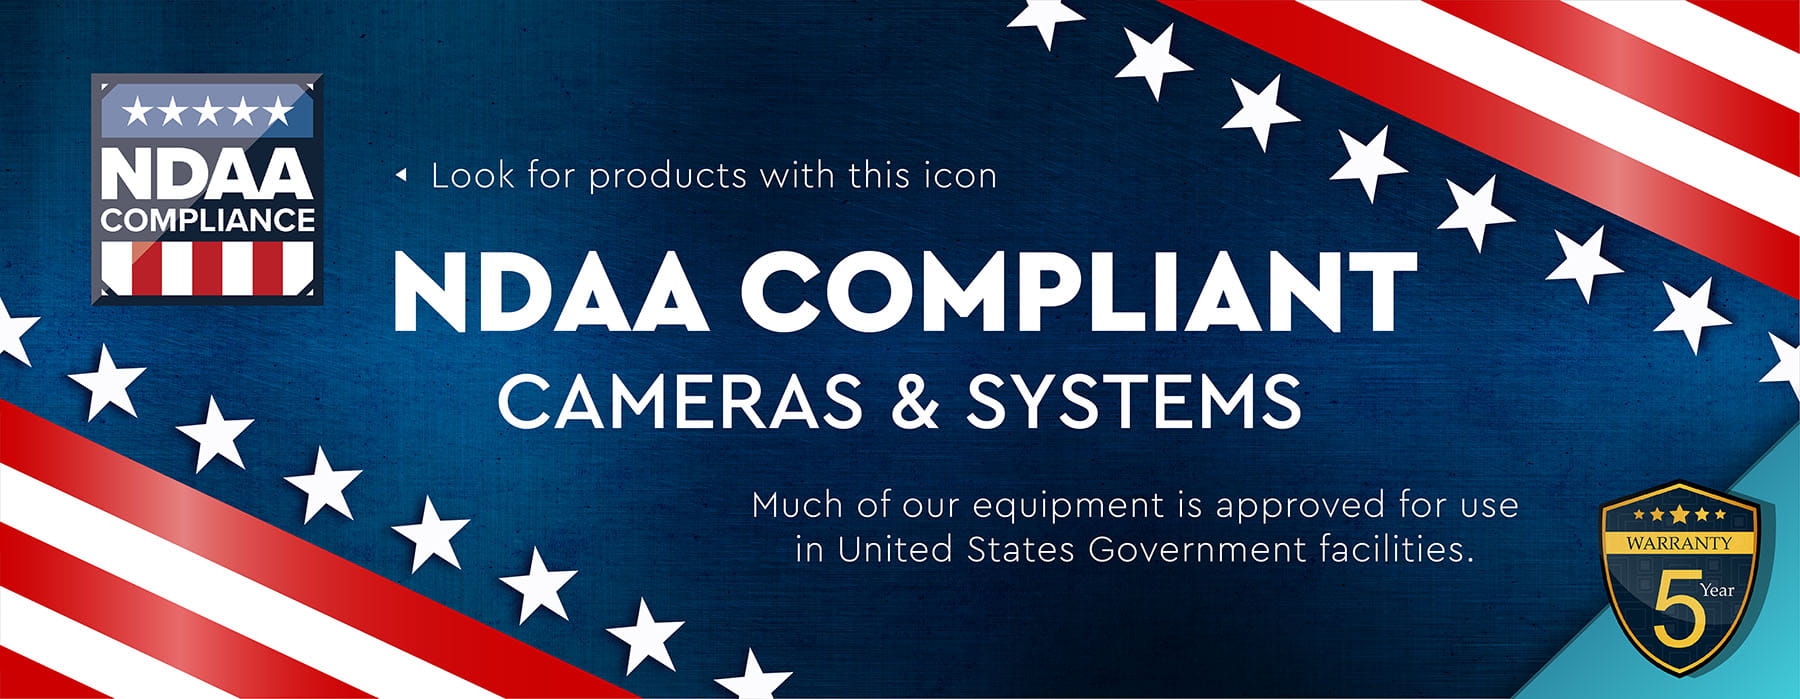 NDAA Compliant CCTV Equipment